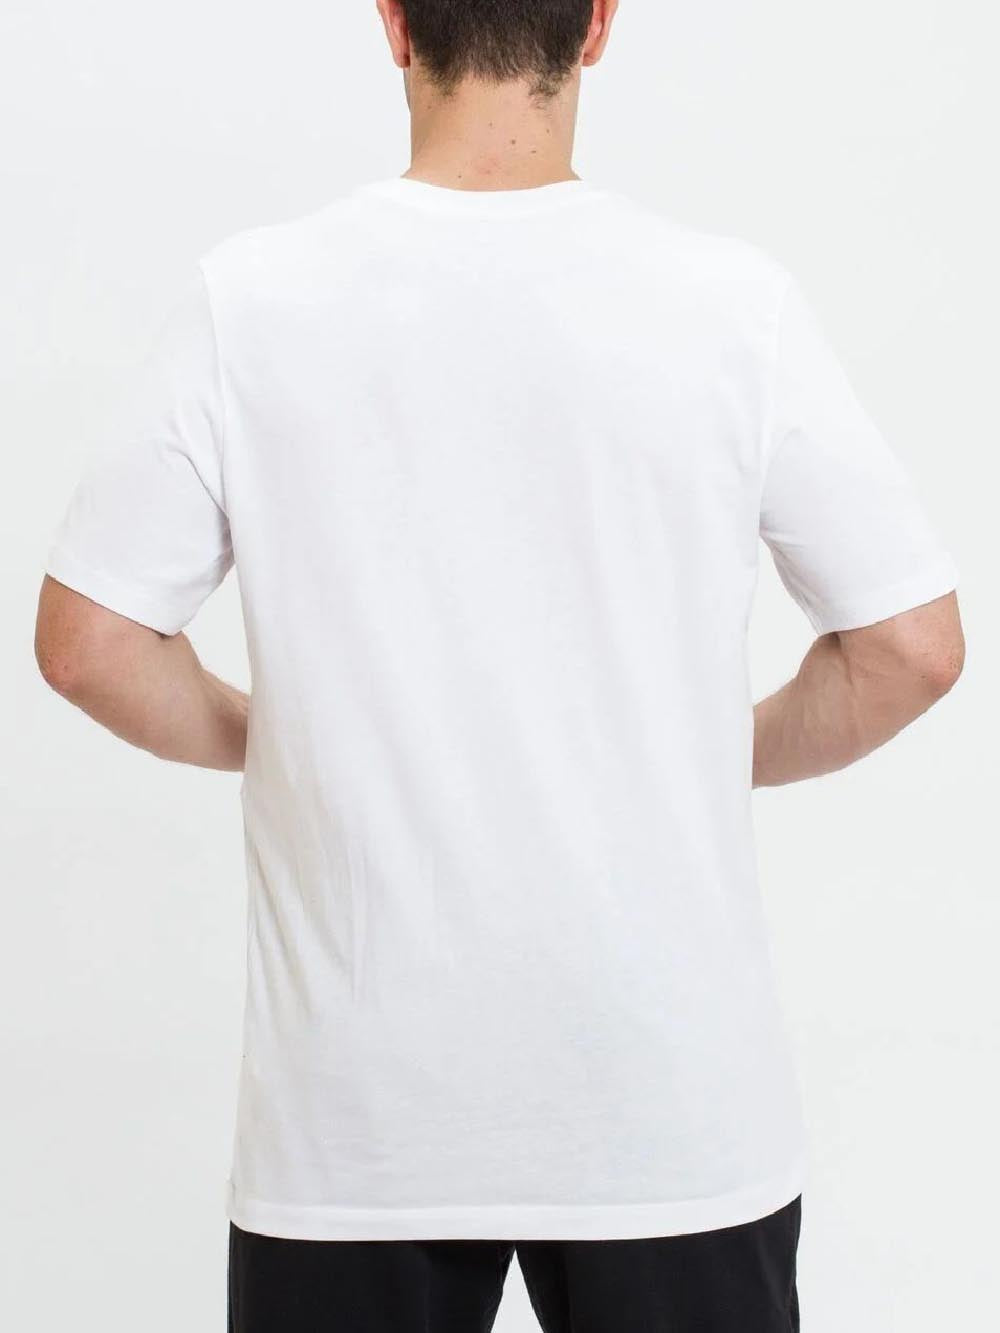 NIke T-shirt Uomo Ar5004-101 Bianco